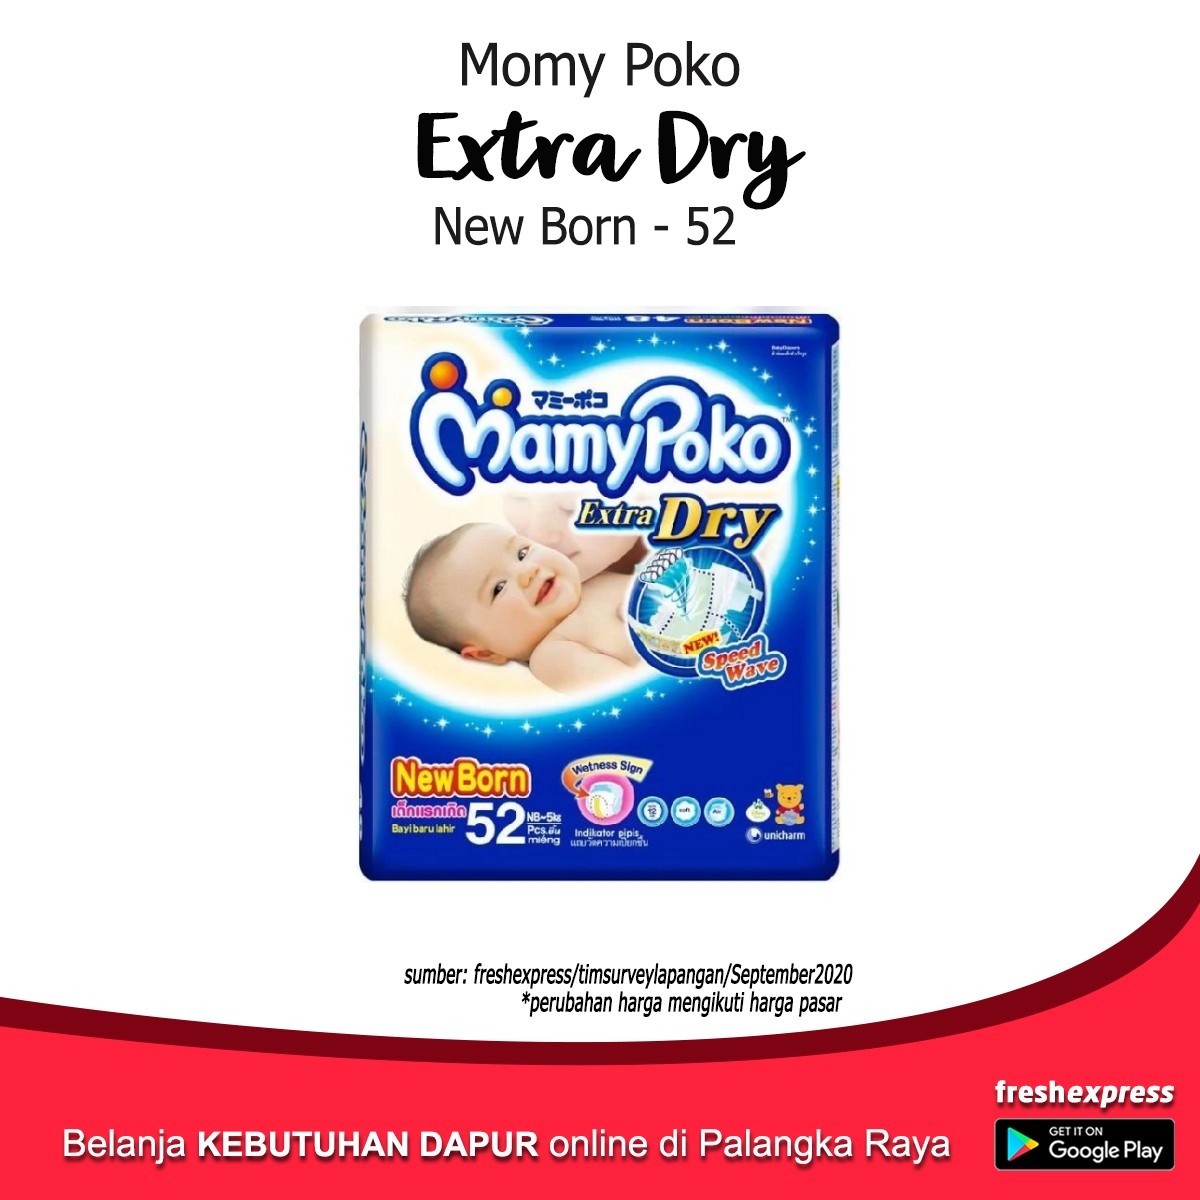 Mamy Poko Extra Dry New Born 52